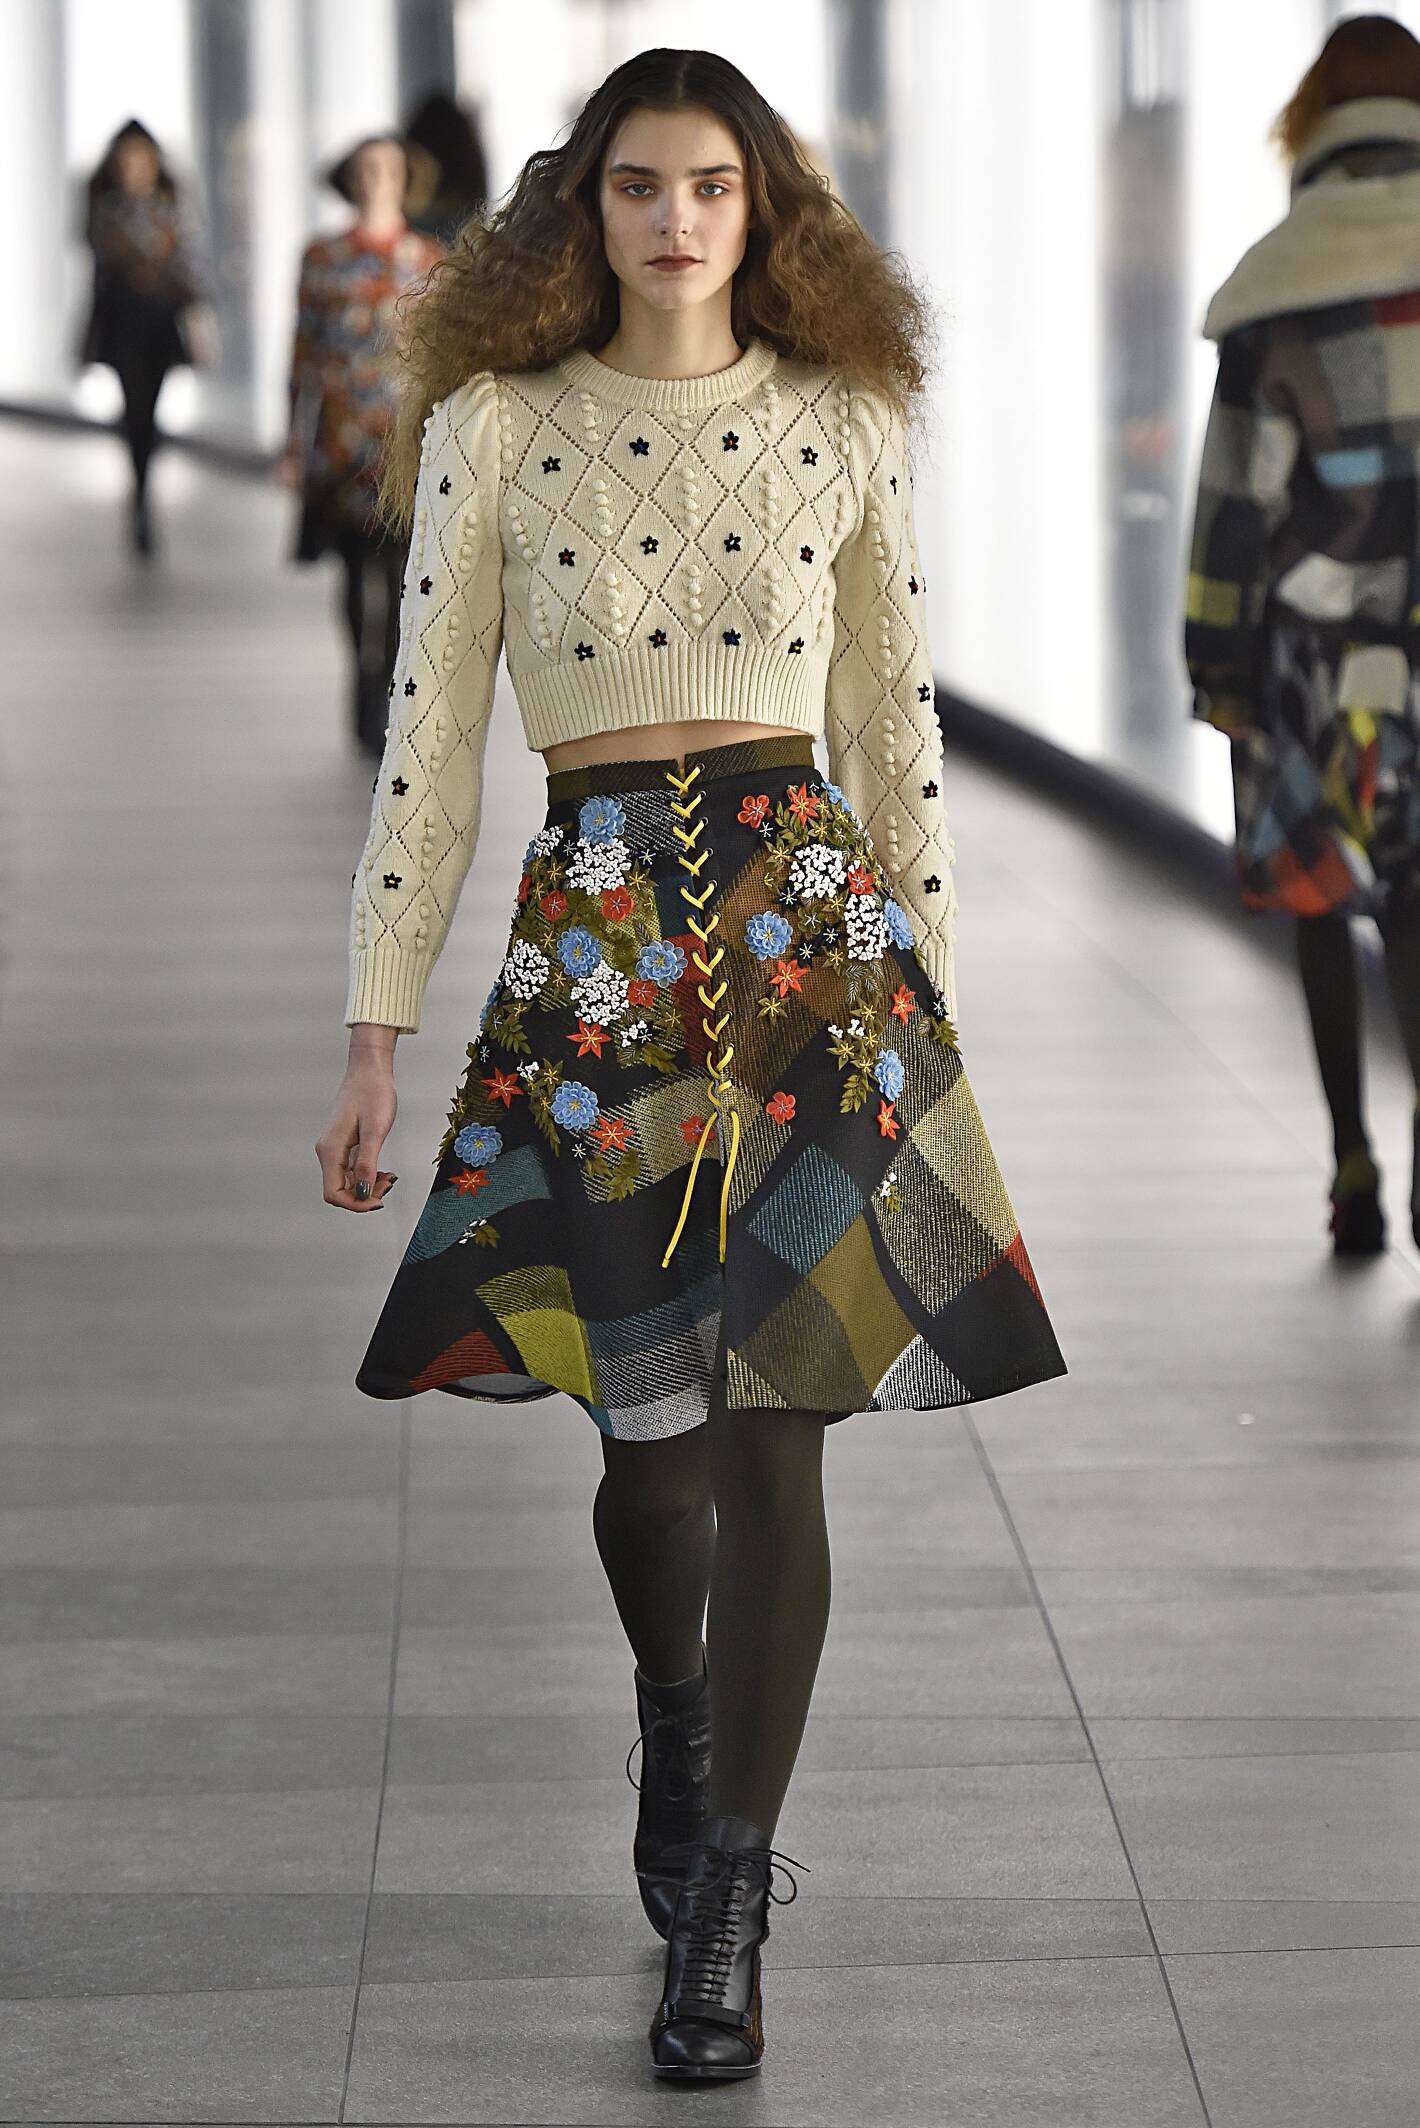 Preen by Thornton Bregazzi Fall Winter 2015 16 Women's Collection London Fashion Week Fashion Show